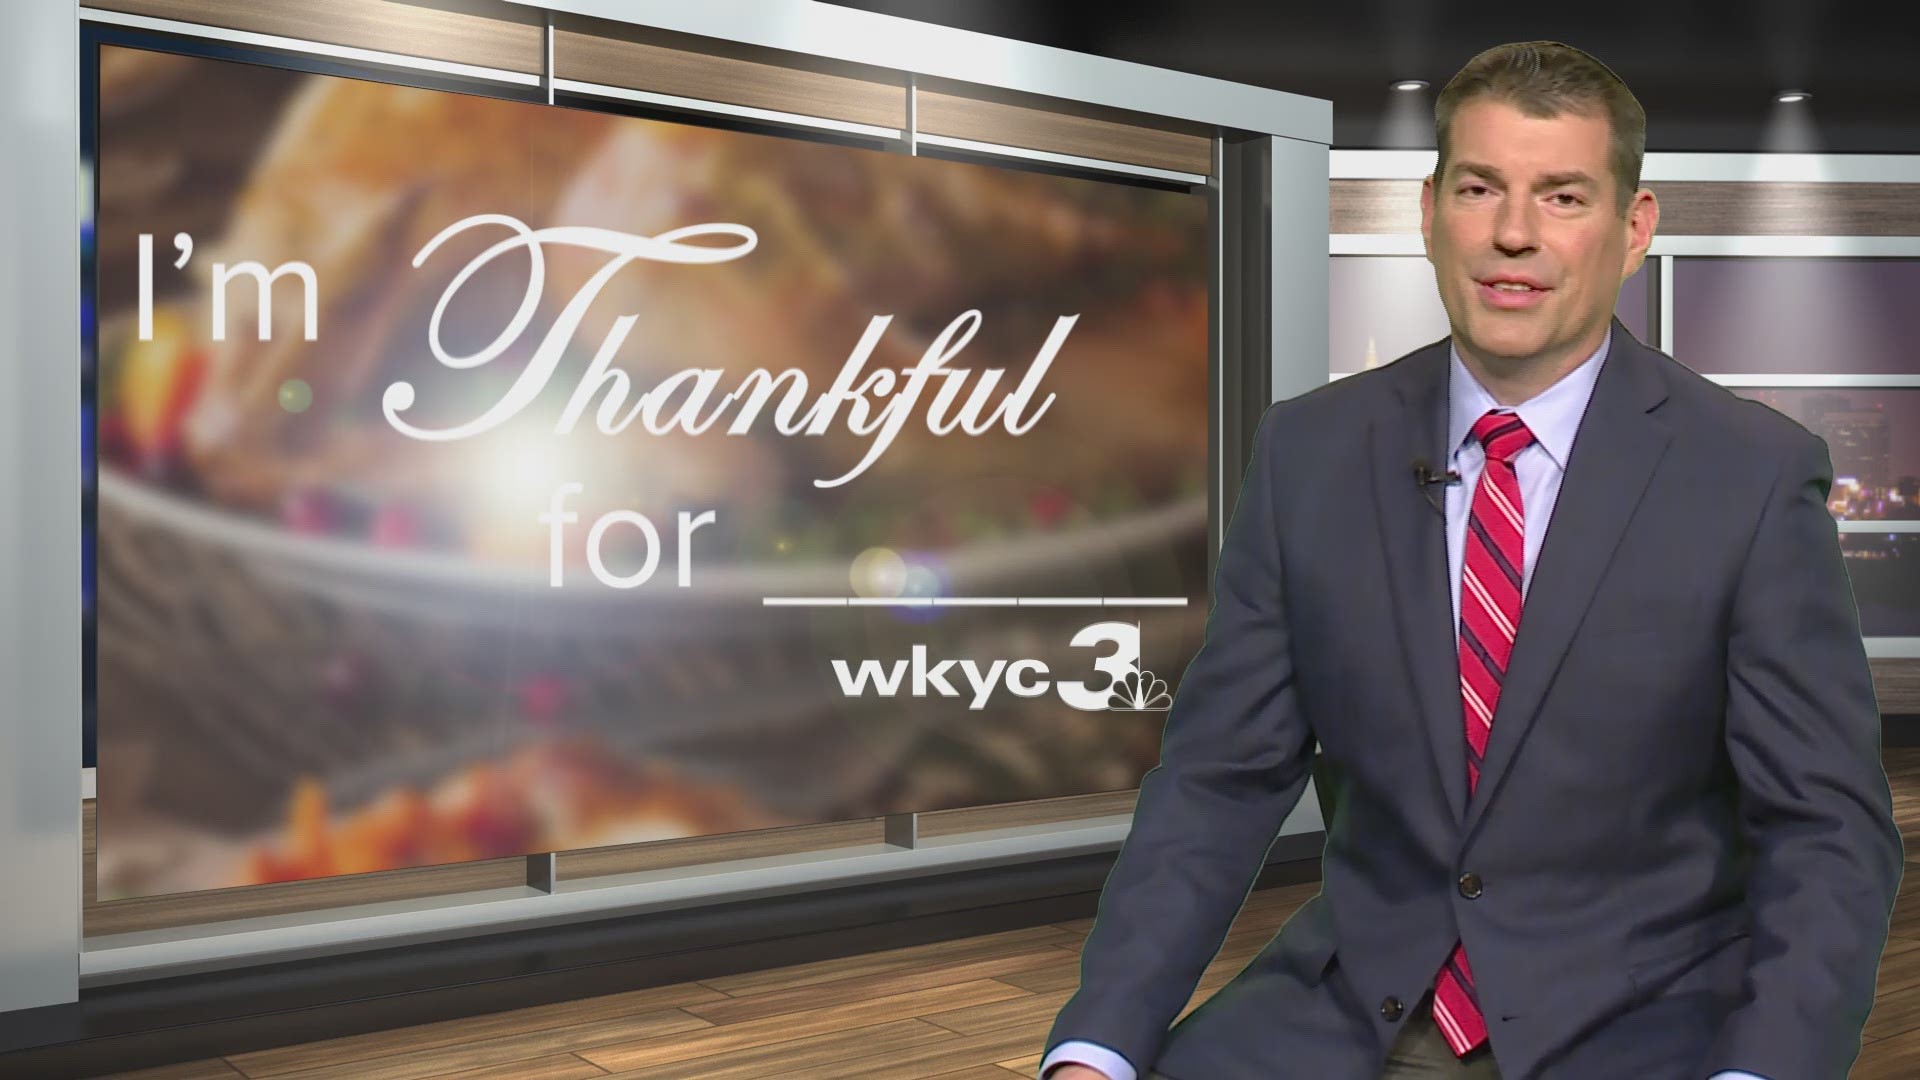 WKYC morning anchor Dave Chudowsky tells us why he's thankful.